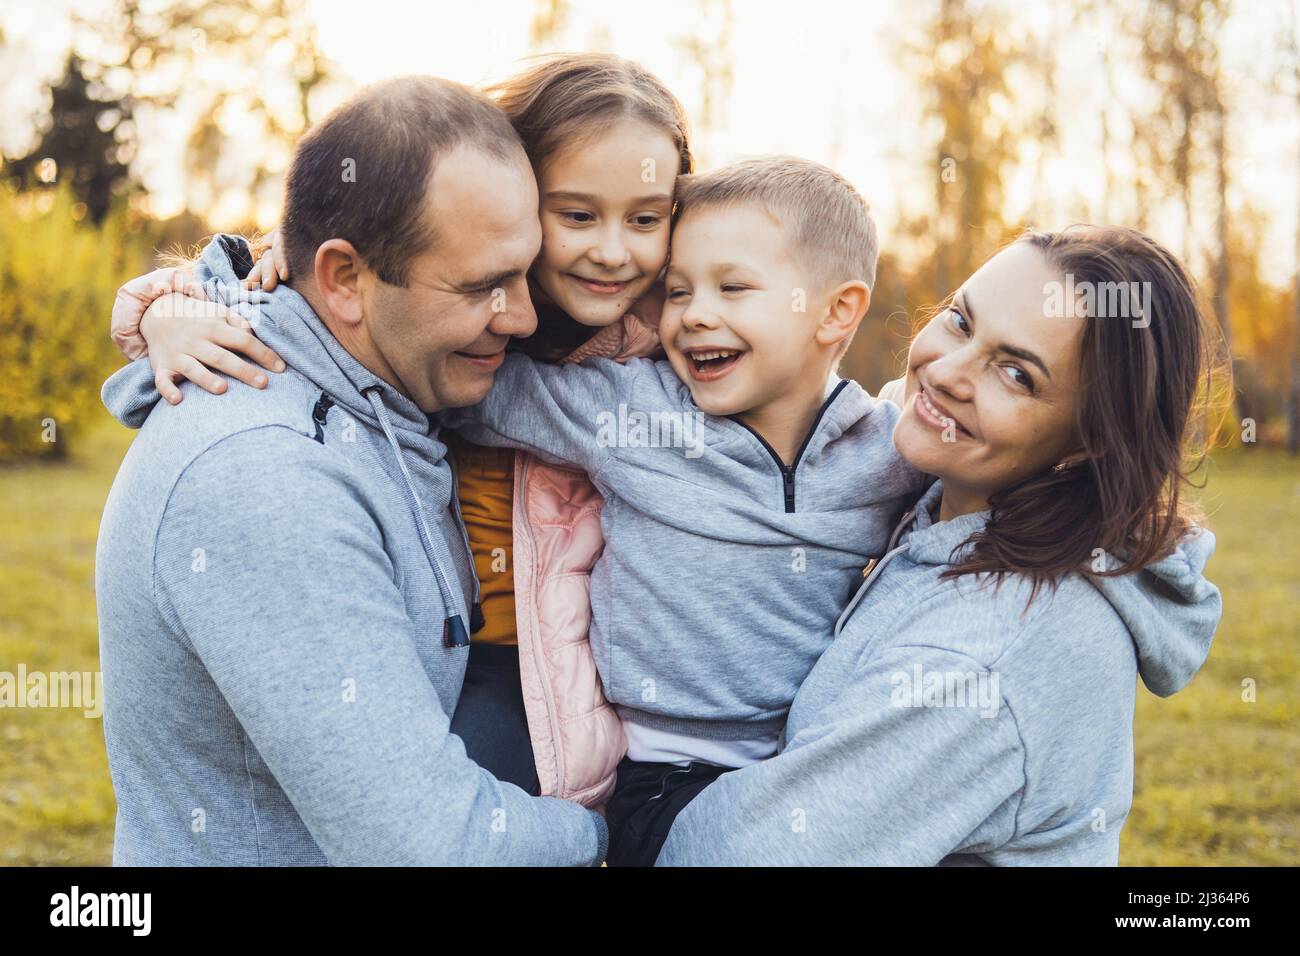 Extended Family Photos | NE Kansas Photographer - littleleapling.com